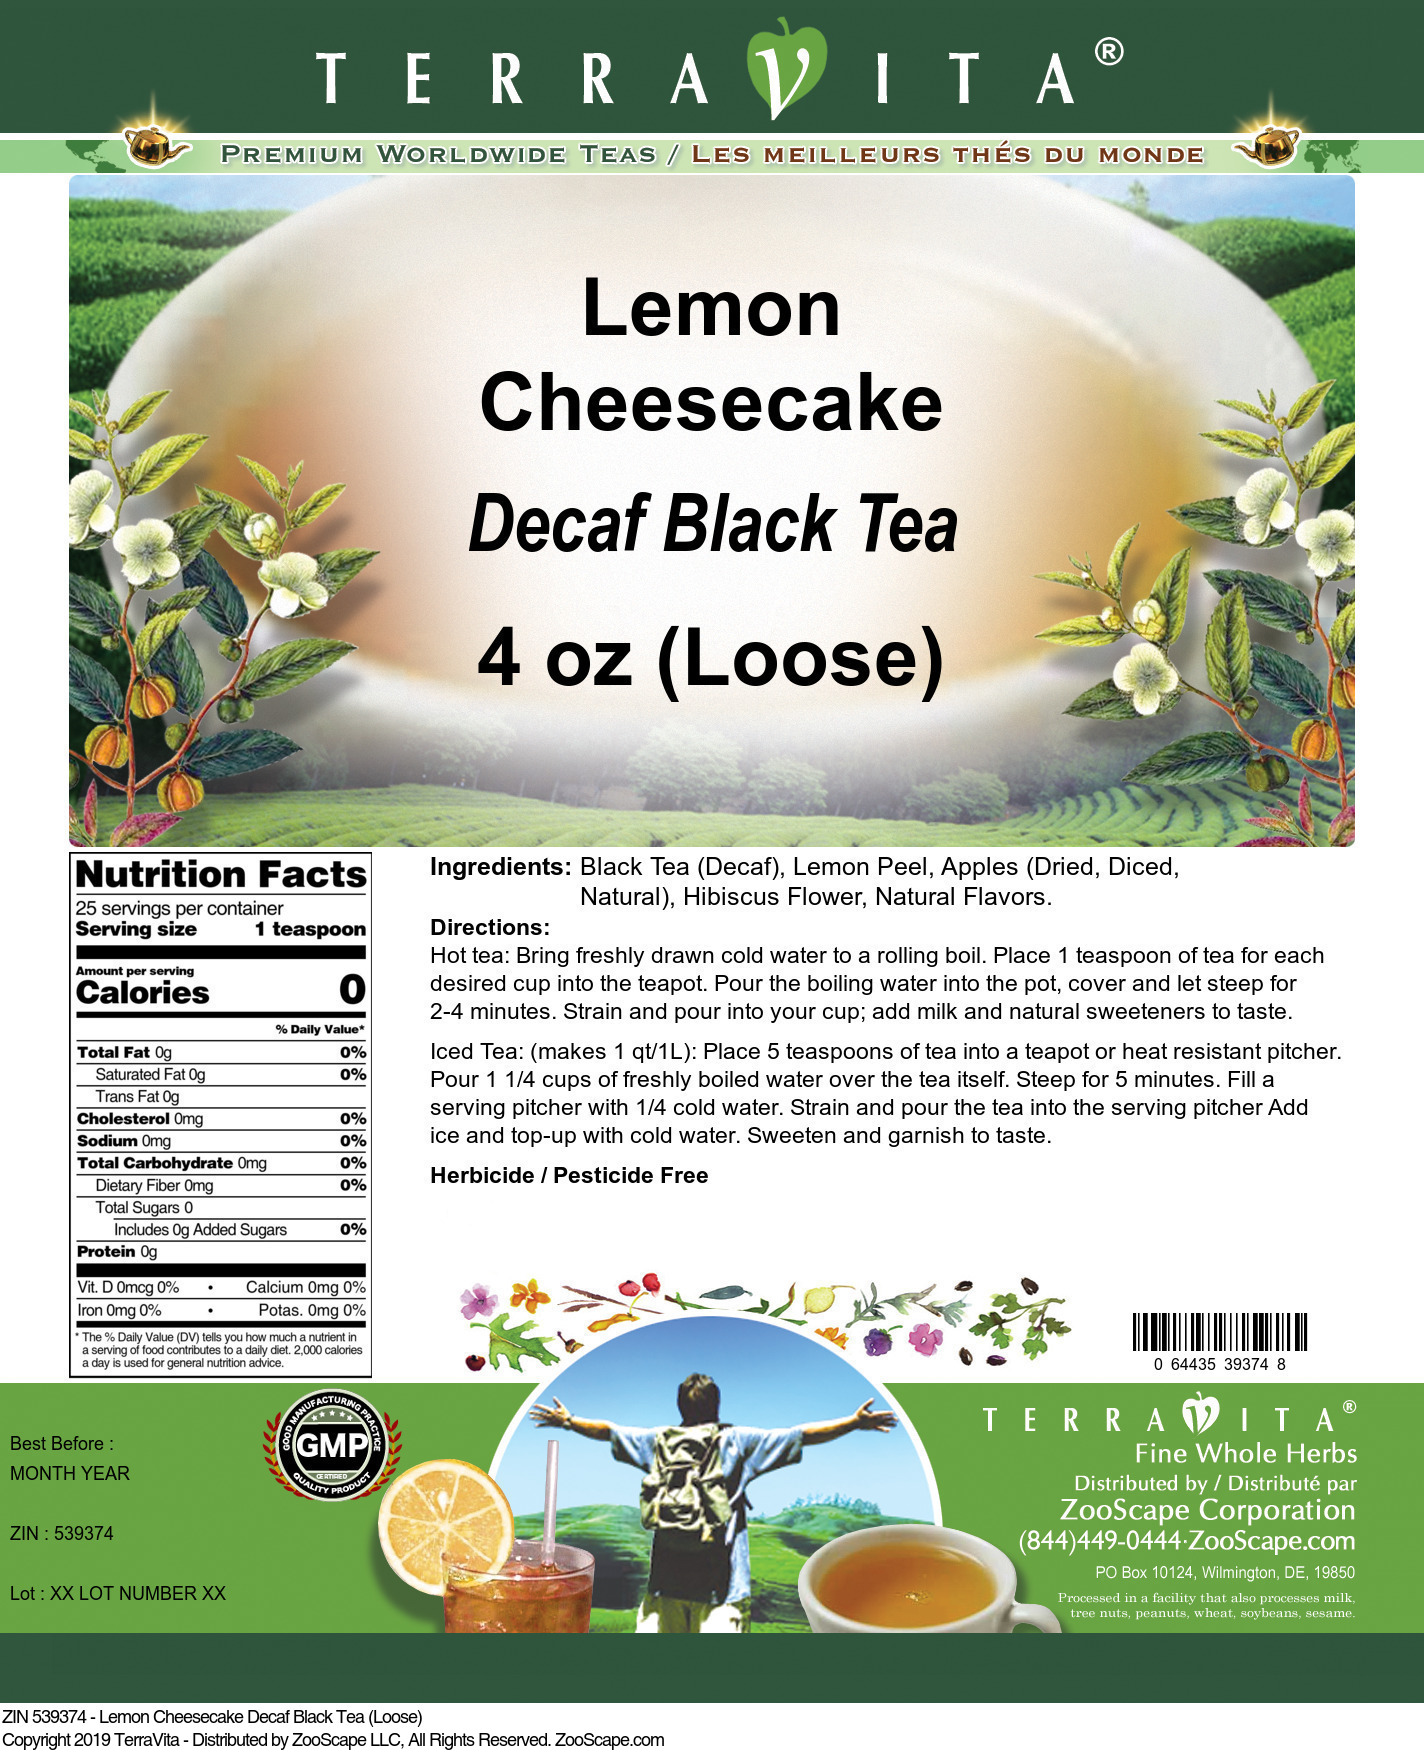 Lemon Cheesecake Decaf Black Tea (Loose) - Label